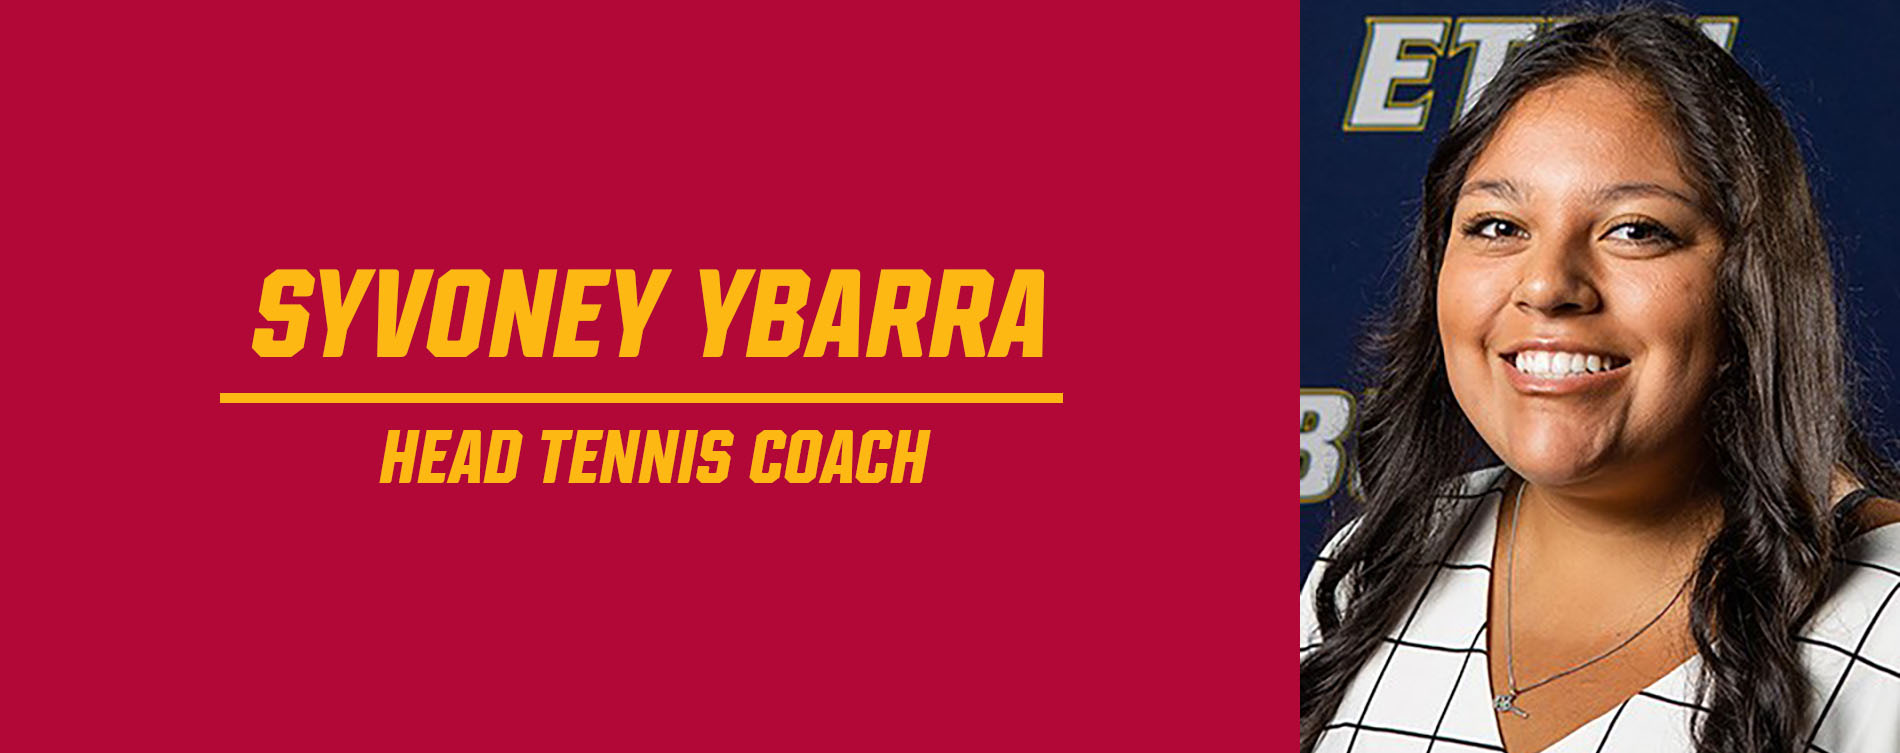 Ybarra Named Head Men's and Women's Tennis Coach